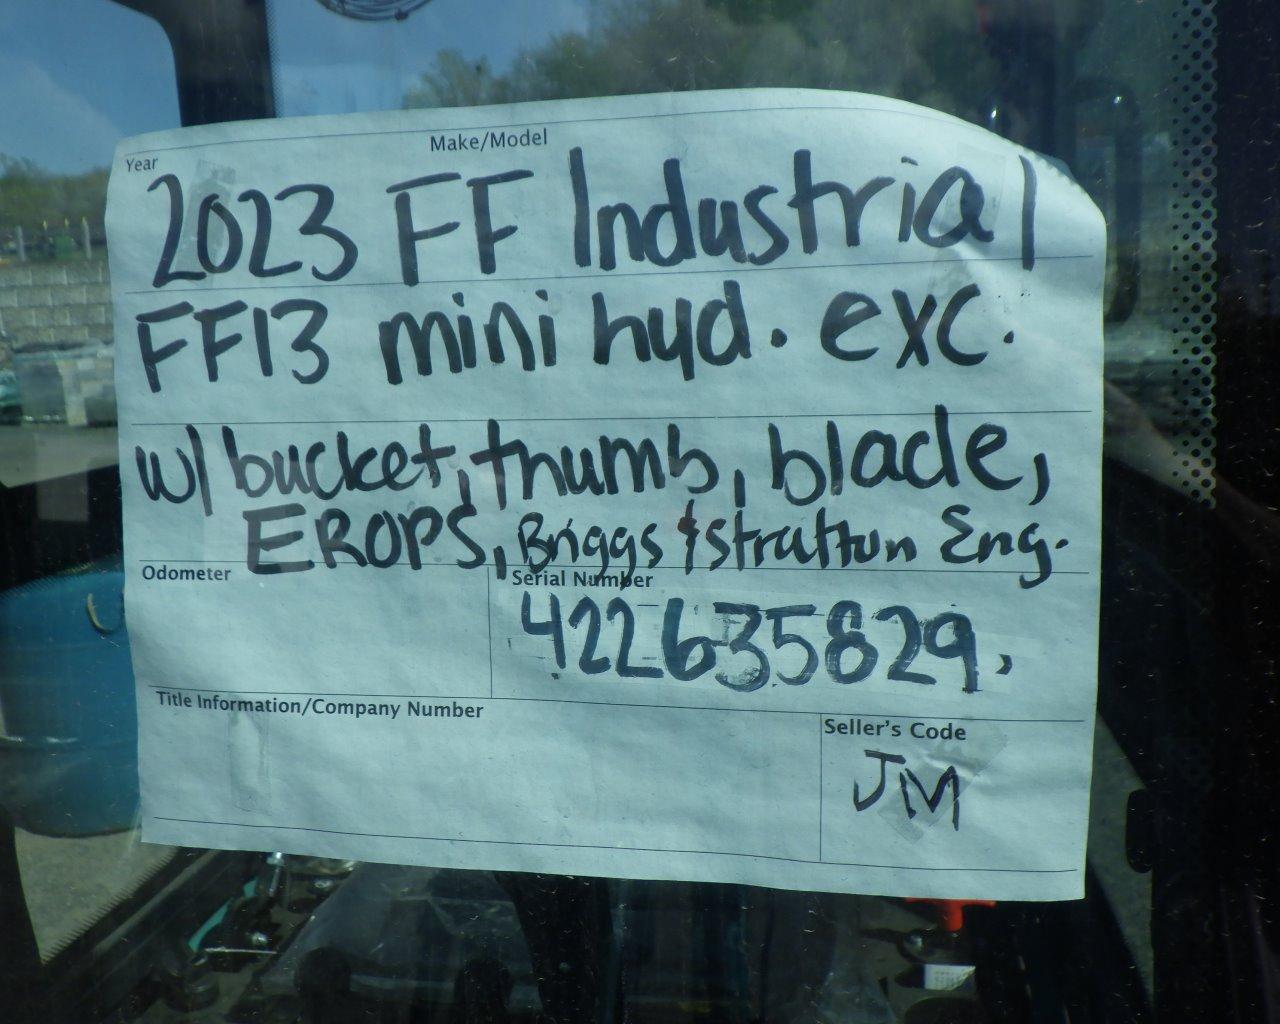 2023 FF INDUSTRIAL FF13 Mini Hyd Excavator w/Bucket   Thumb   Blade   EROPS